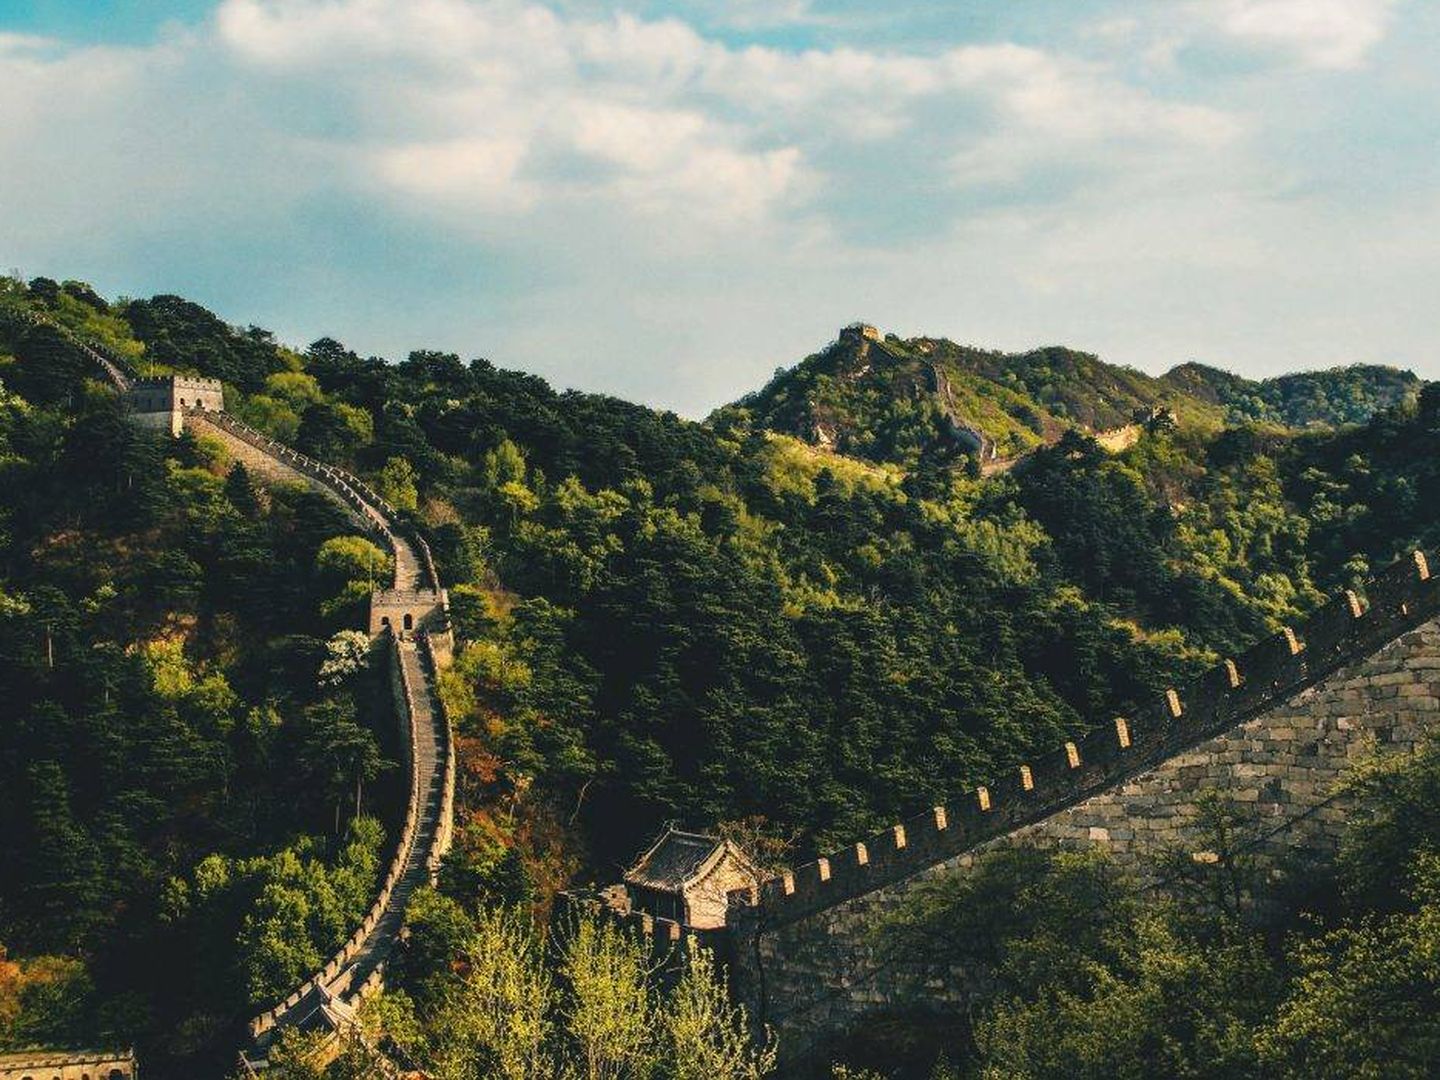 La Gran Muralla china. (N7W.com)